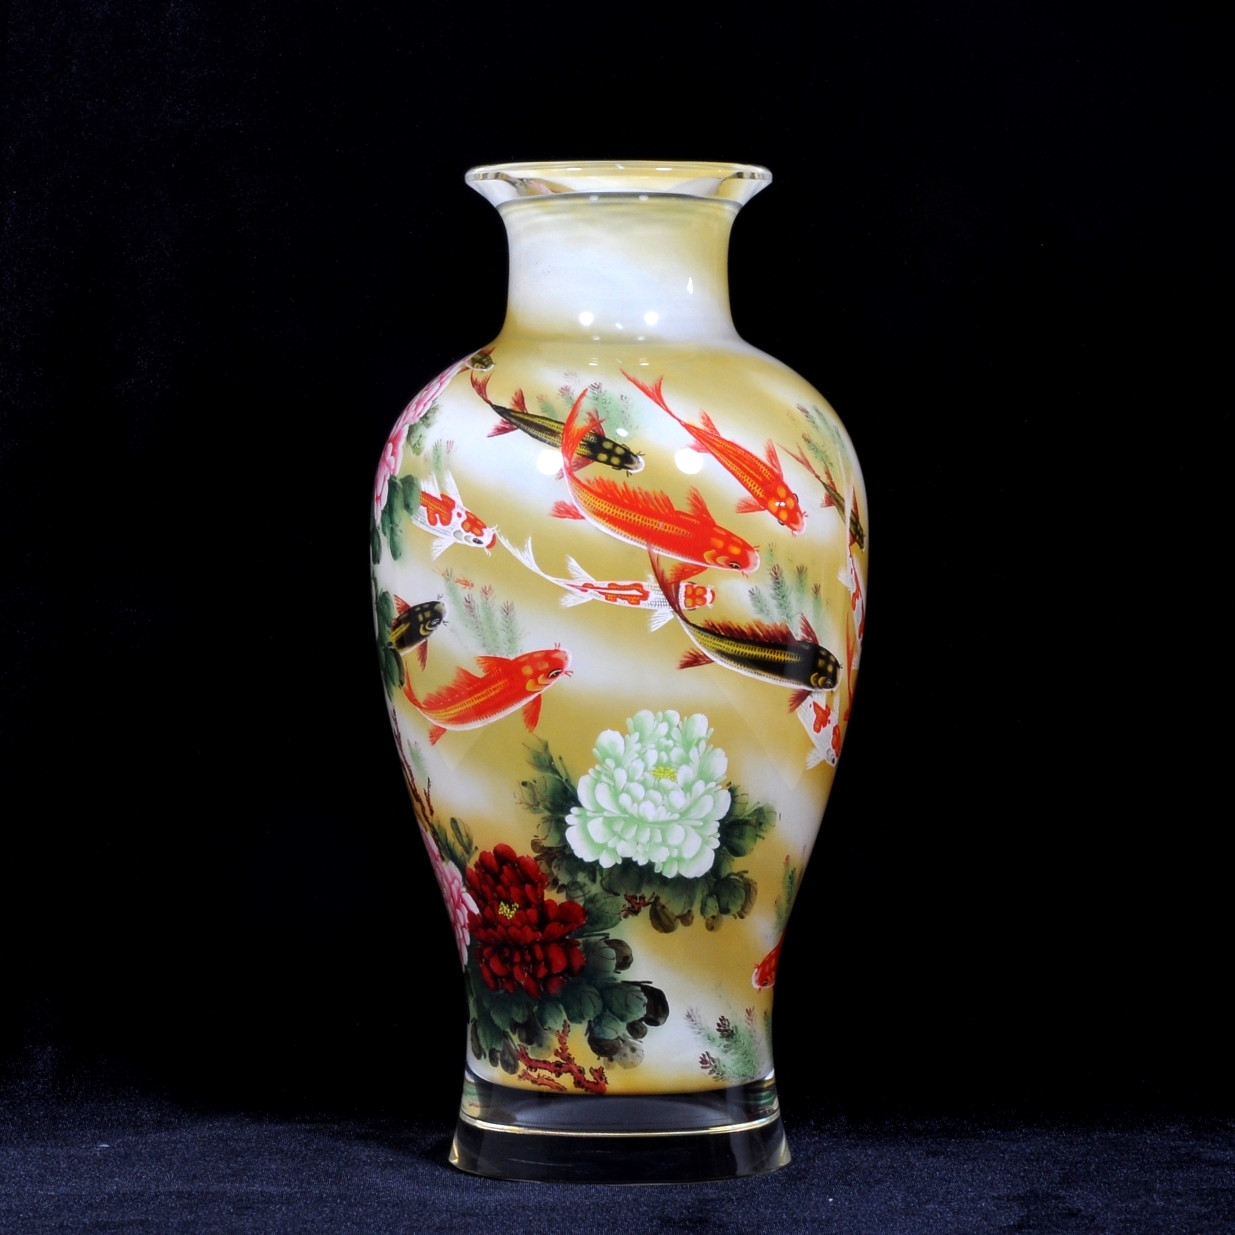 Qian Long vase